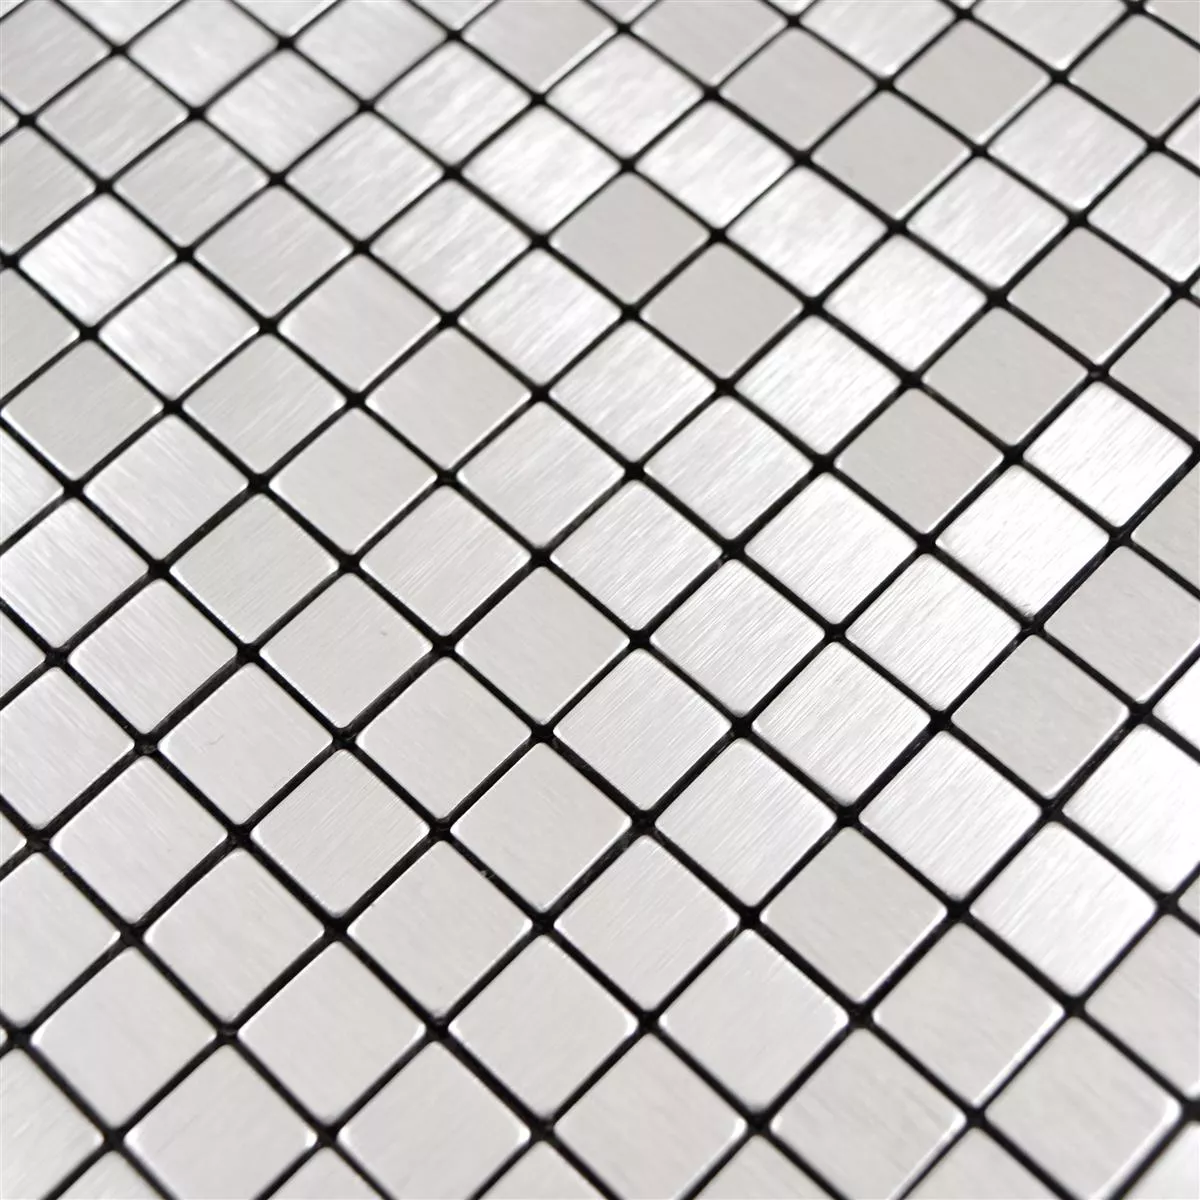 Metallo Mosaico Wygon Autoadesivo Argento 10mm